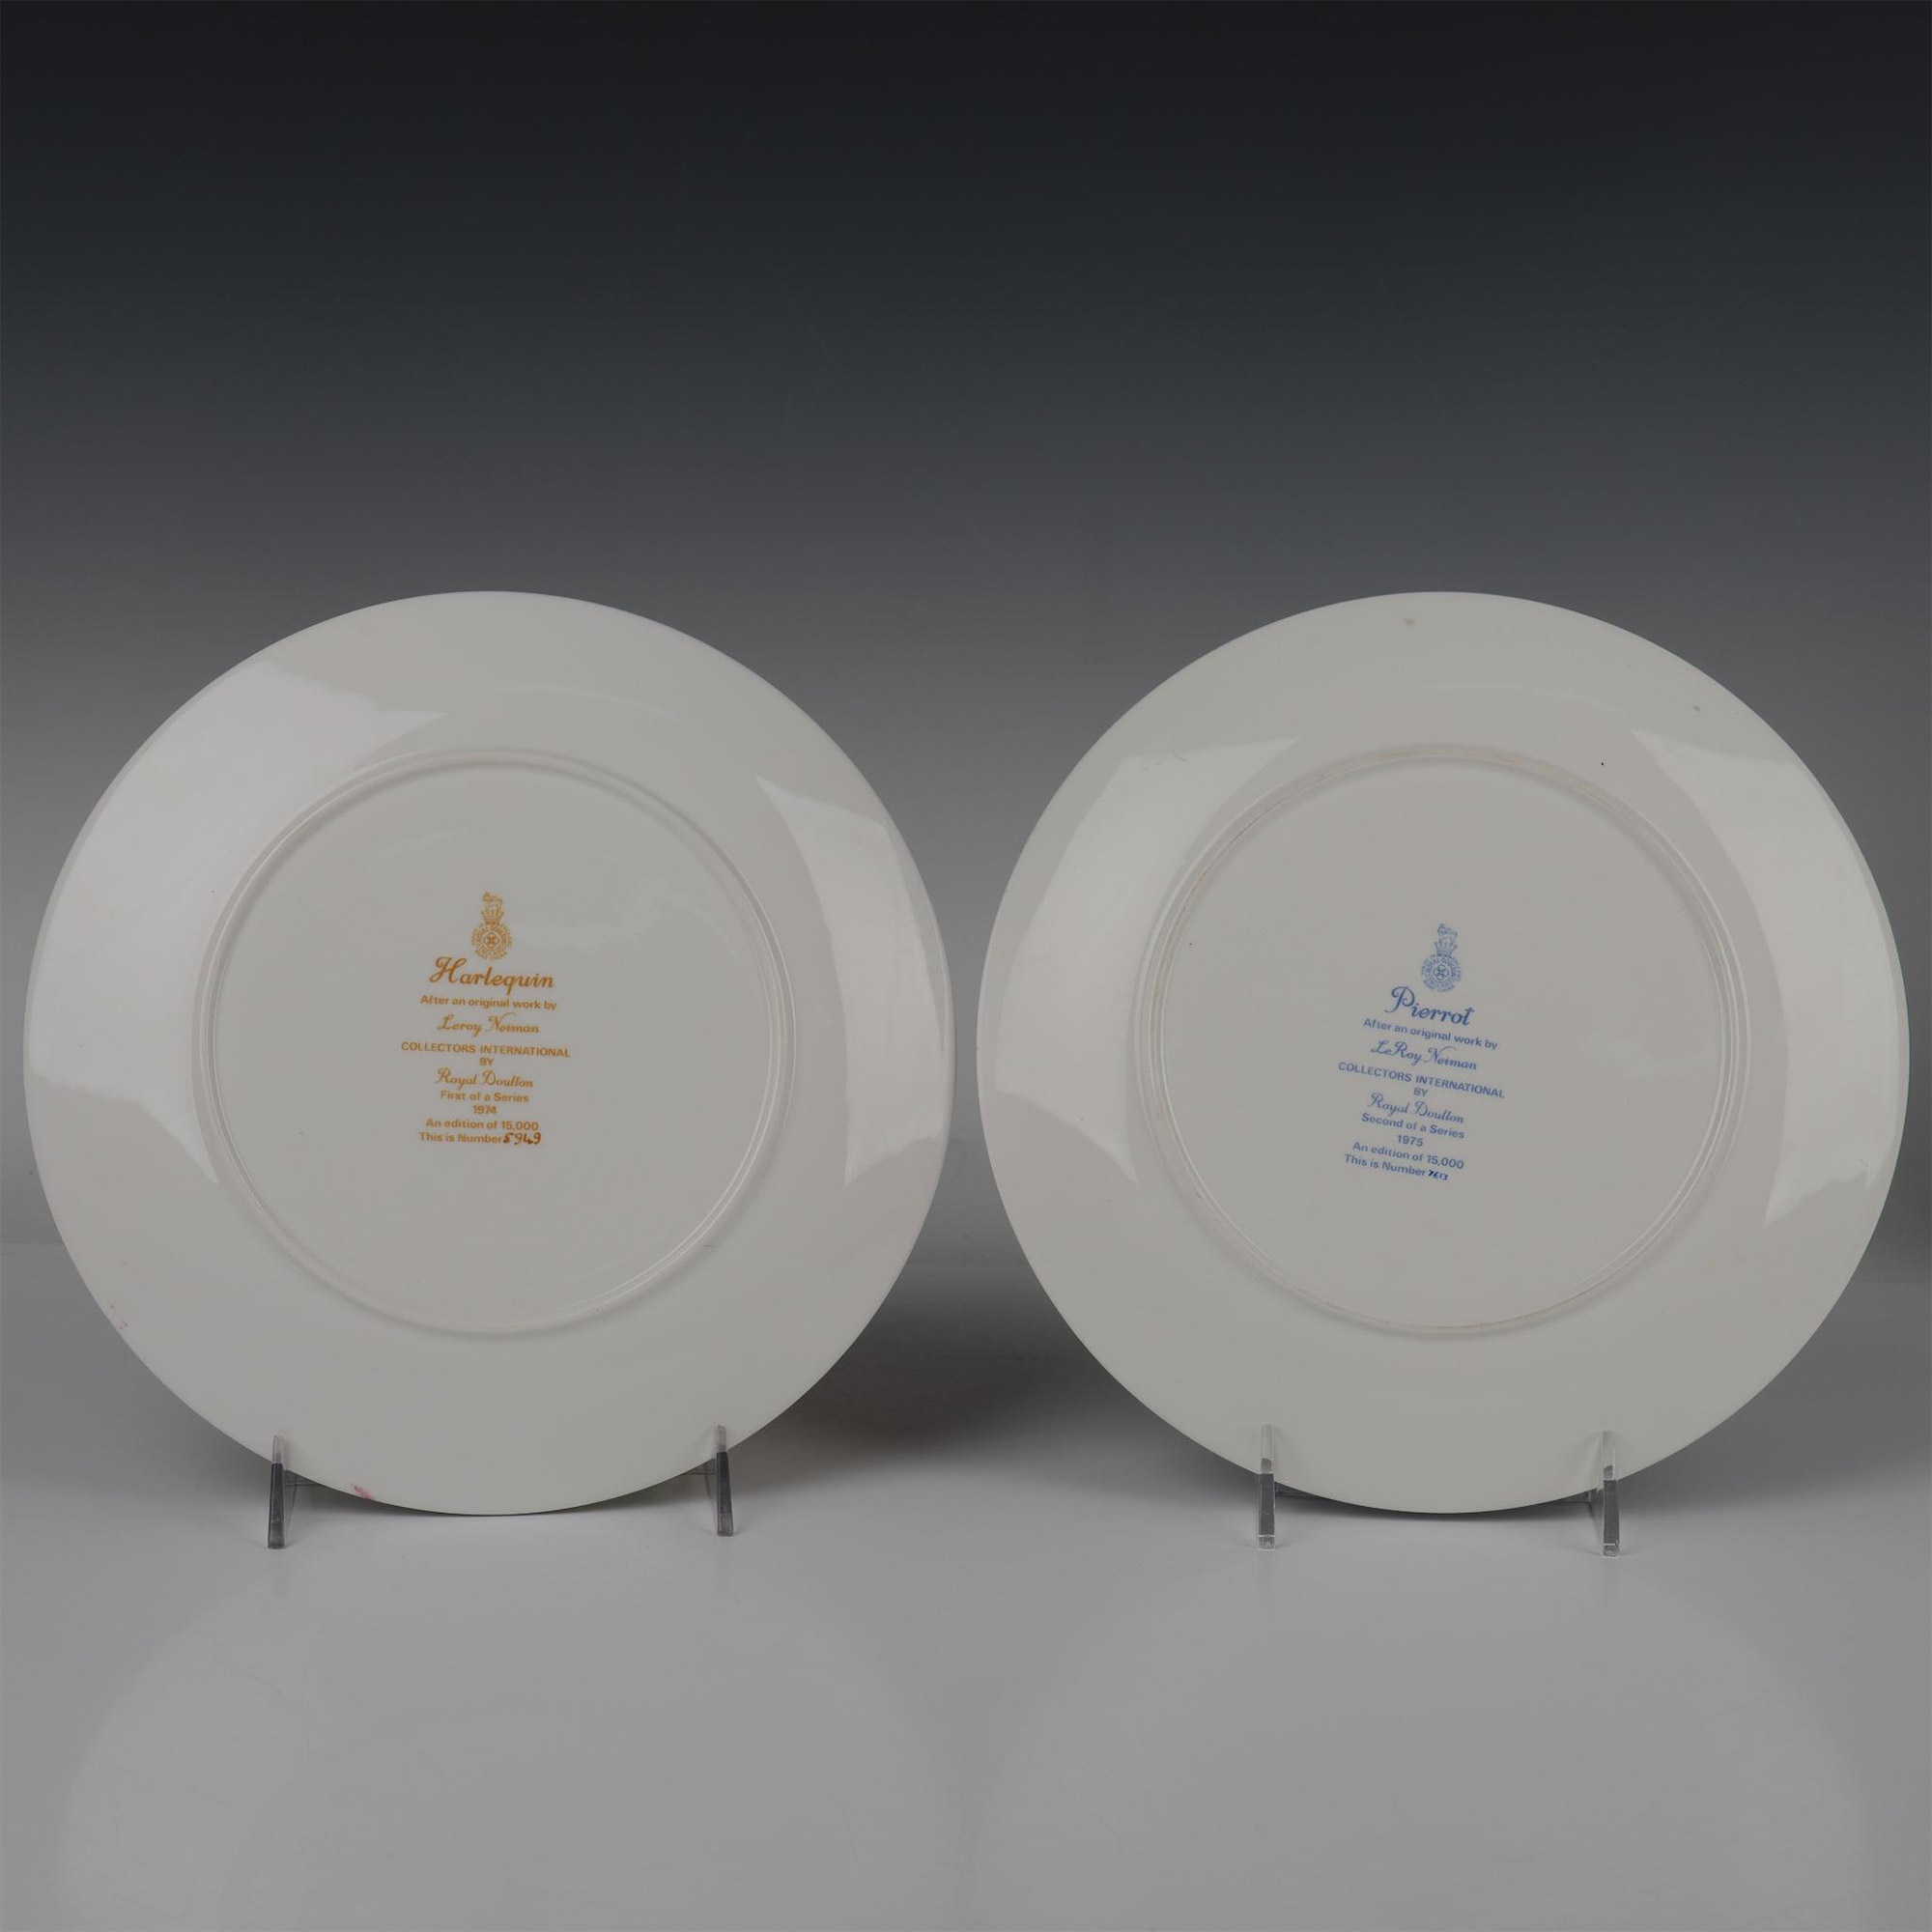 4pc Limited Ed. Royal Doulton Porcelain Art Plates Set - Image 5 of 9